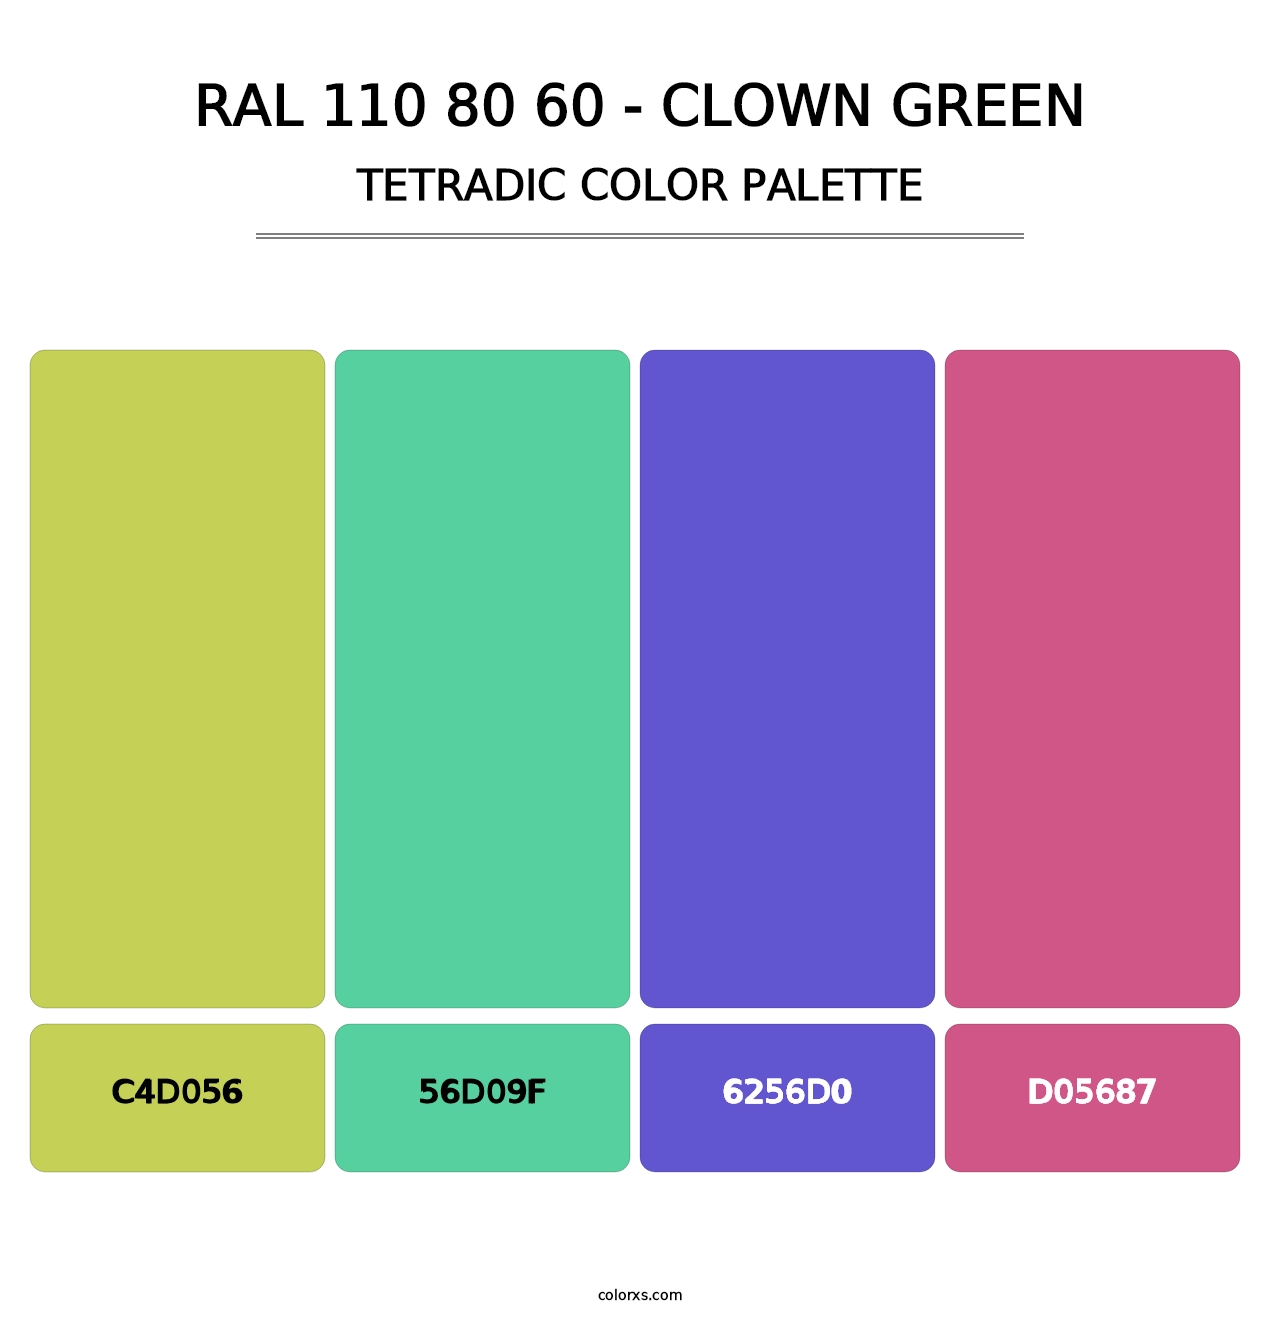 RAL 110 80 60 - Clown Green - Tetradic Color Palette